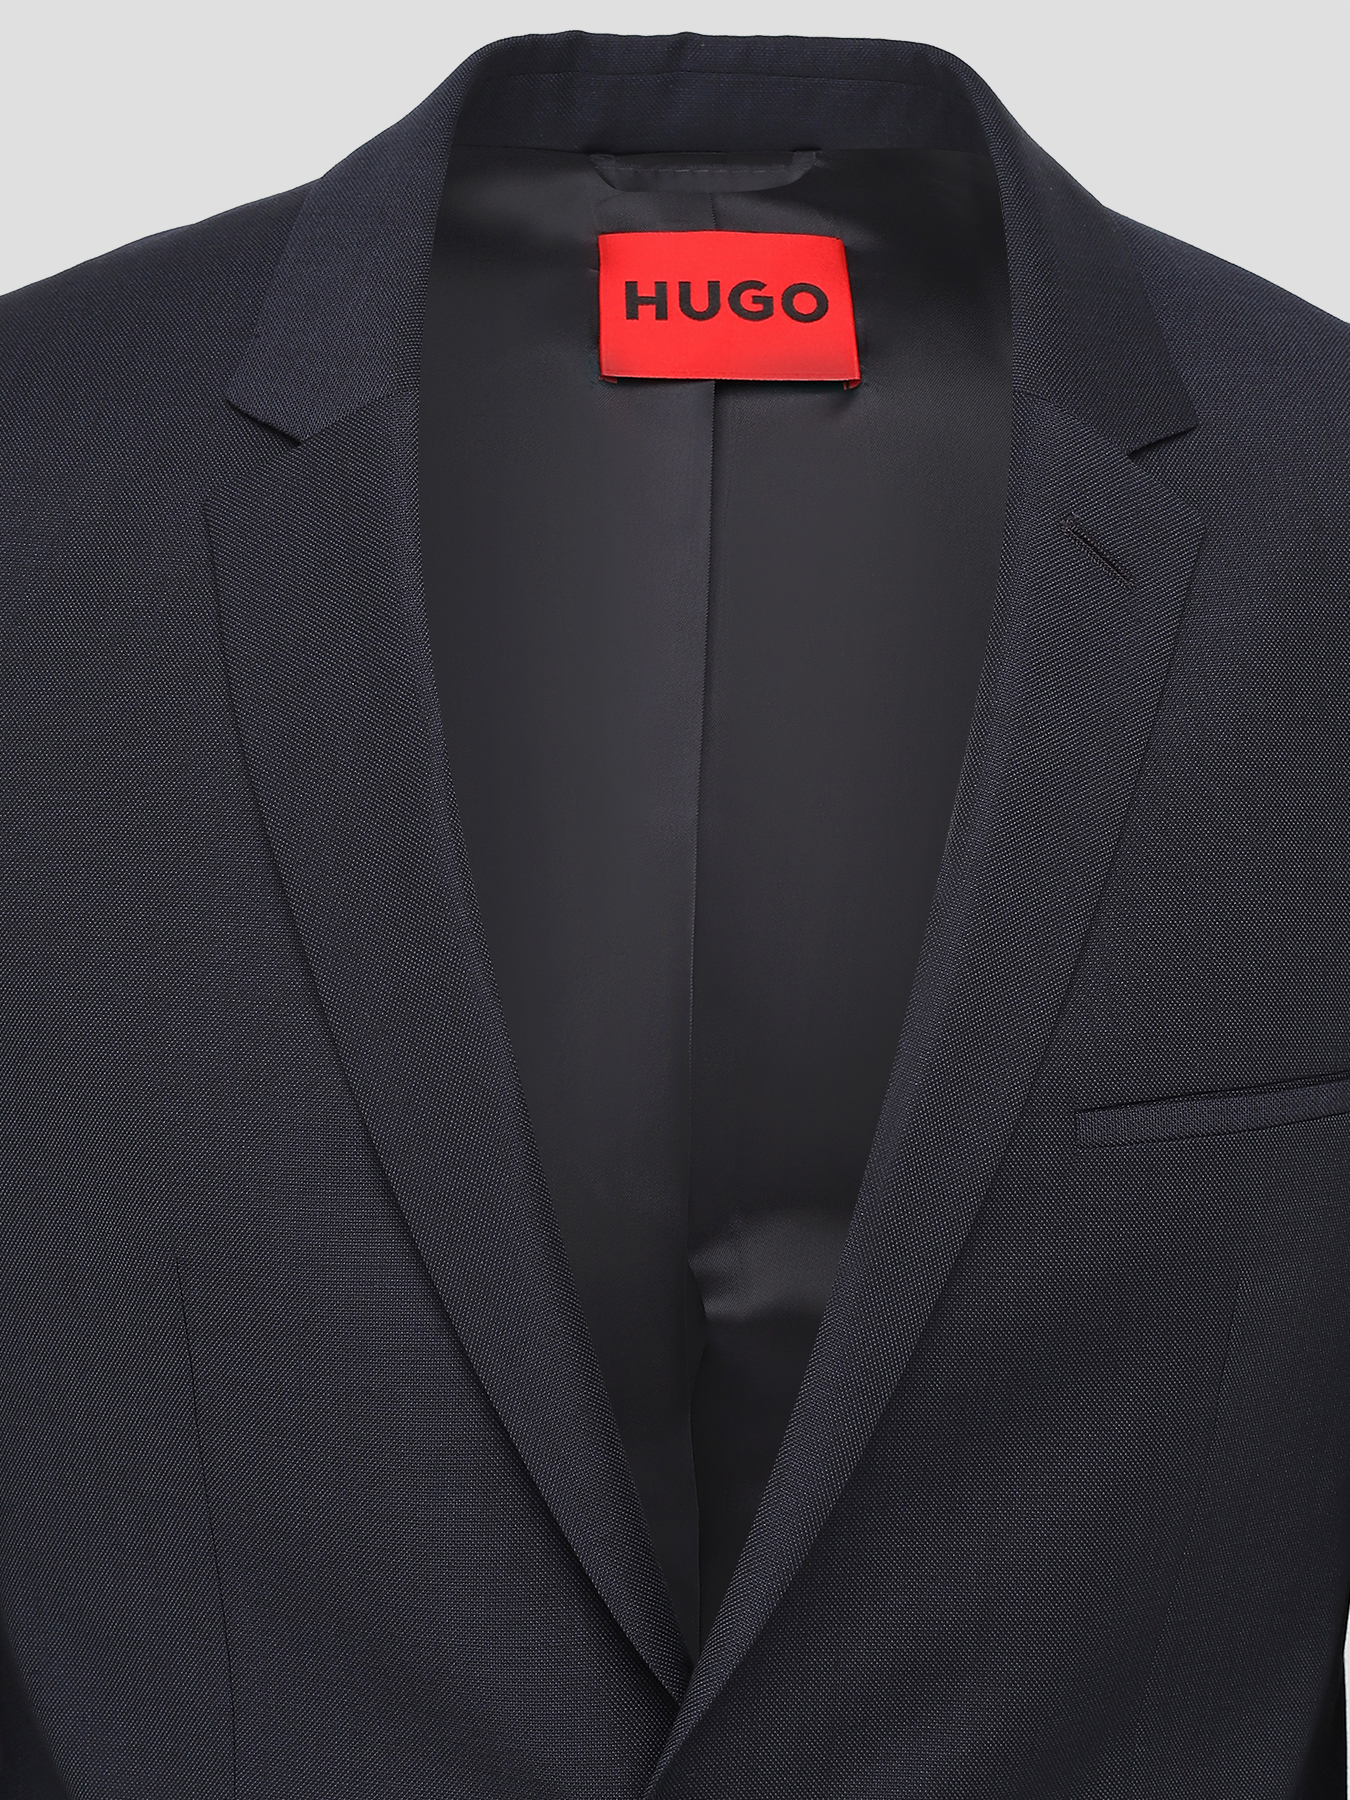 Классический костюм Arti HUGO 424683-025, цвет темно-синий, размер 48 - фото 7